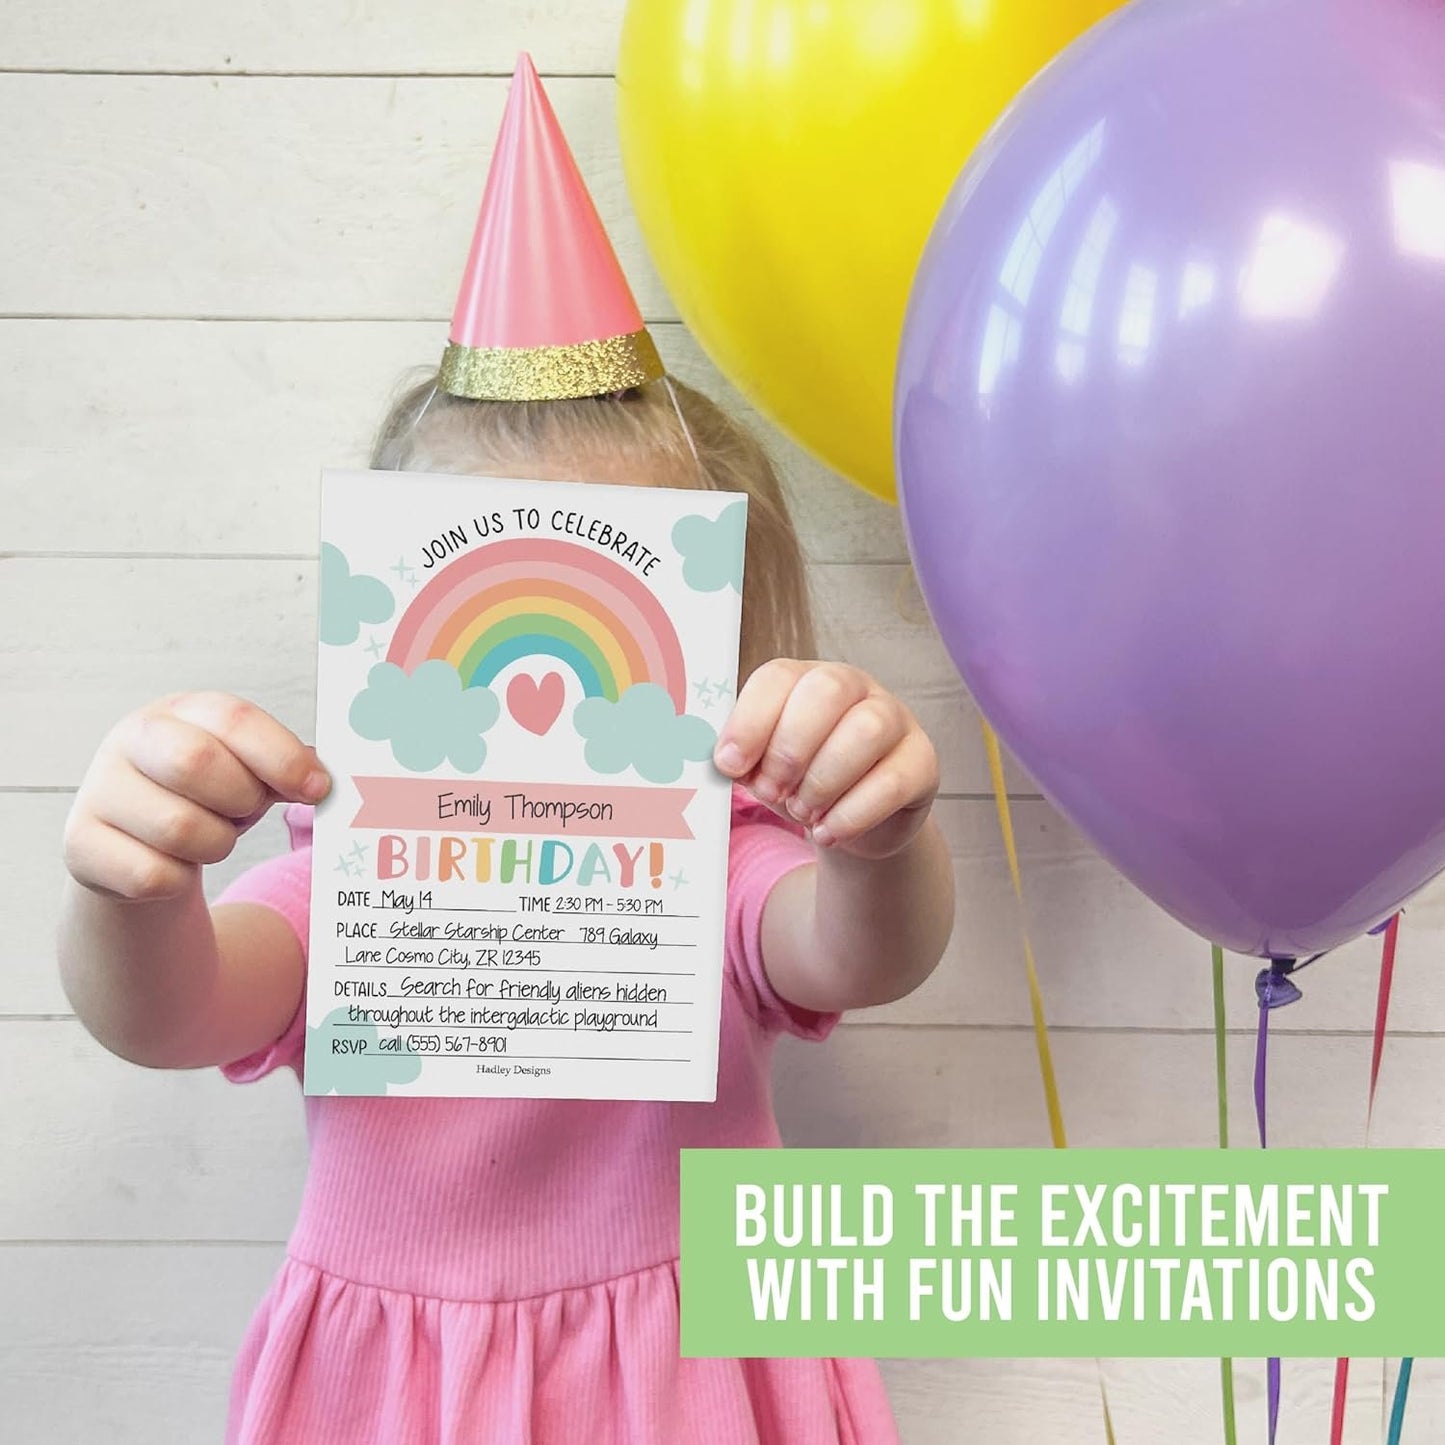 15 Colorful Rainbow Birthday Invitations Girl - Birthday Party Invitations For Girls, Rainbow Party Invitations For Birthday Party Invitation Girl, Invitation Cards, Kids Birthday Invitations Girl